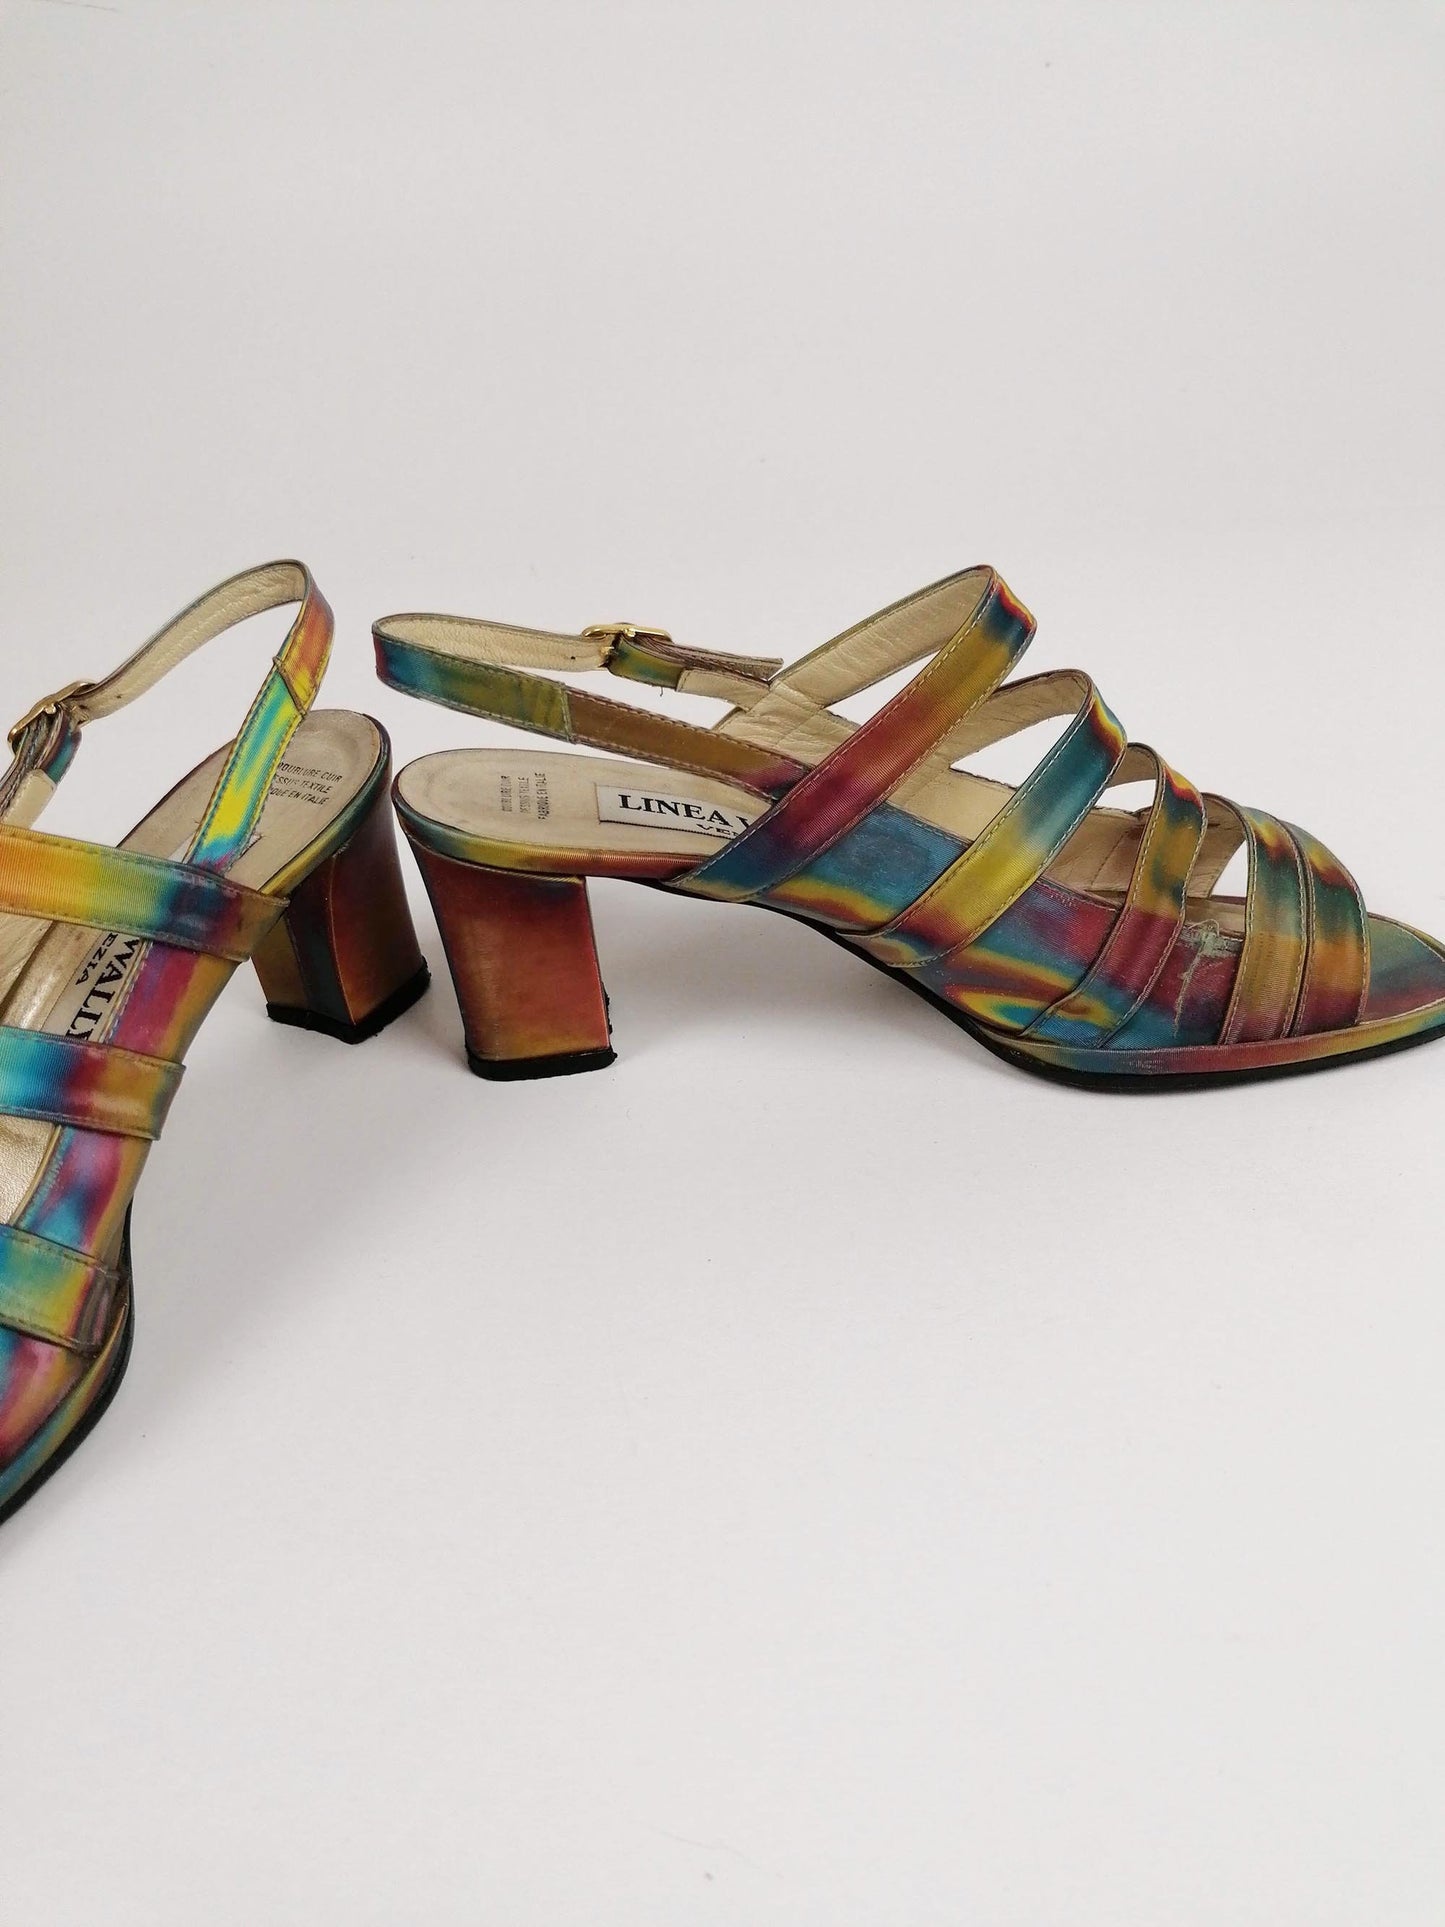 Holographic 80's 90's LINEA WALLYS Retro Sandals -  Size EU 37.5 / UK 4.5